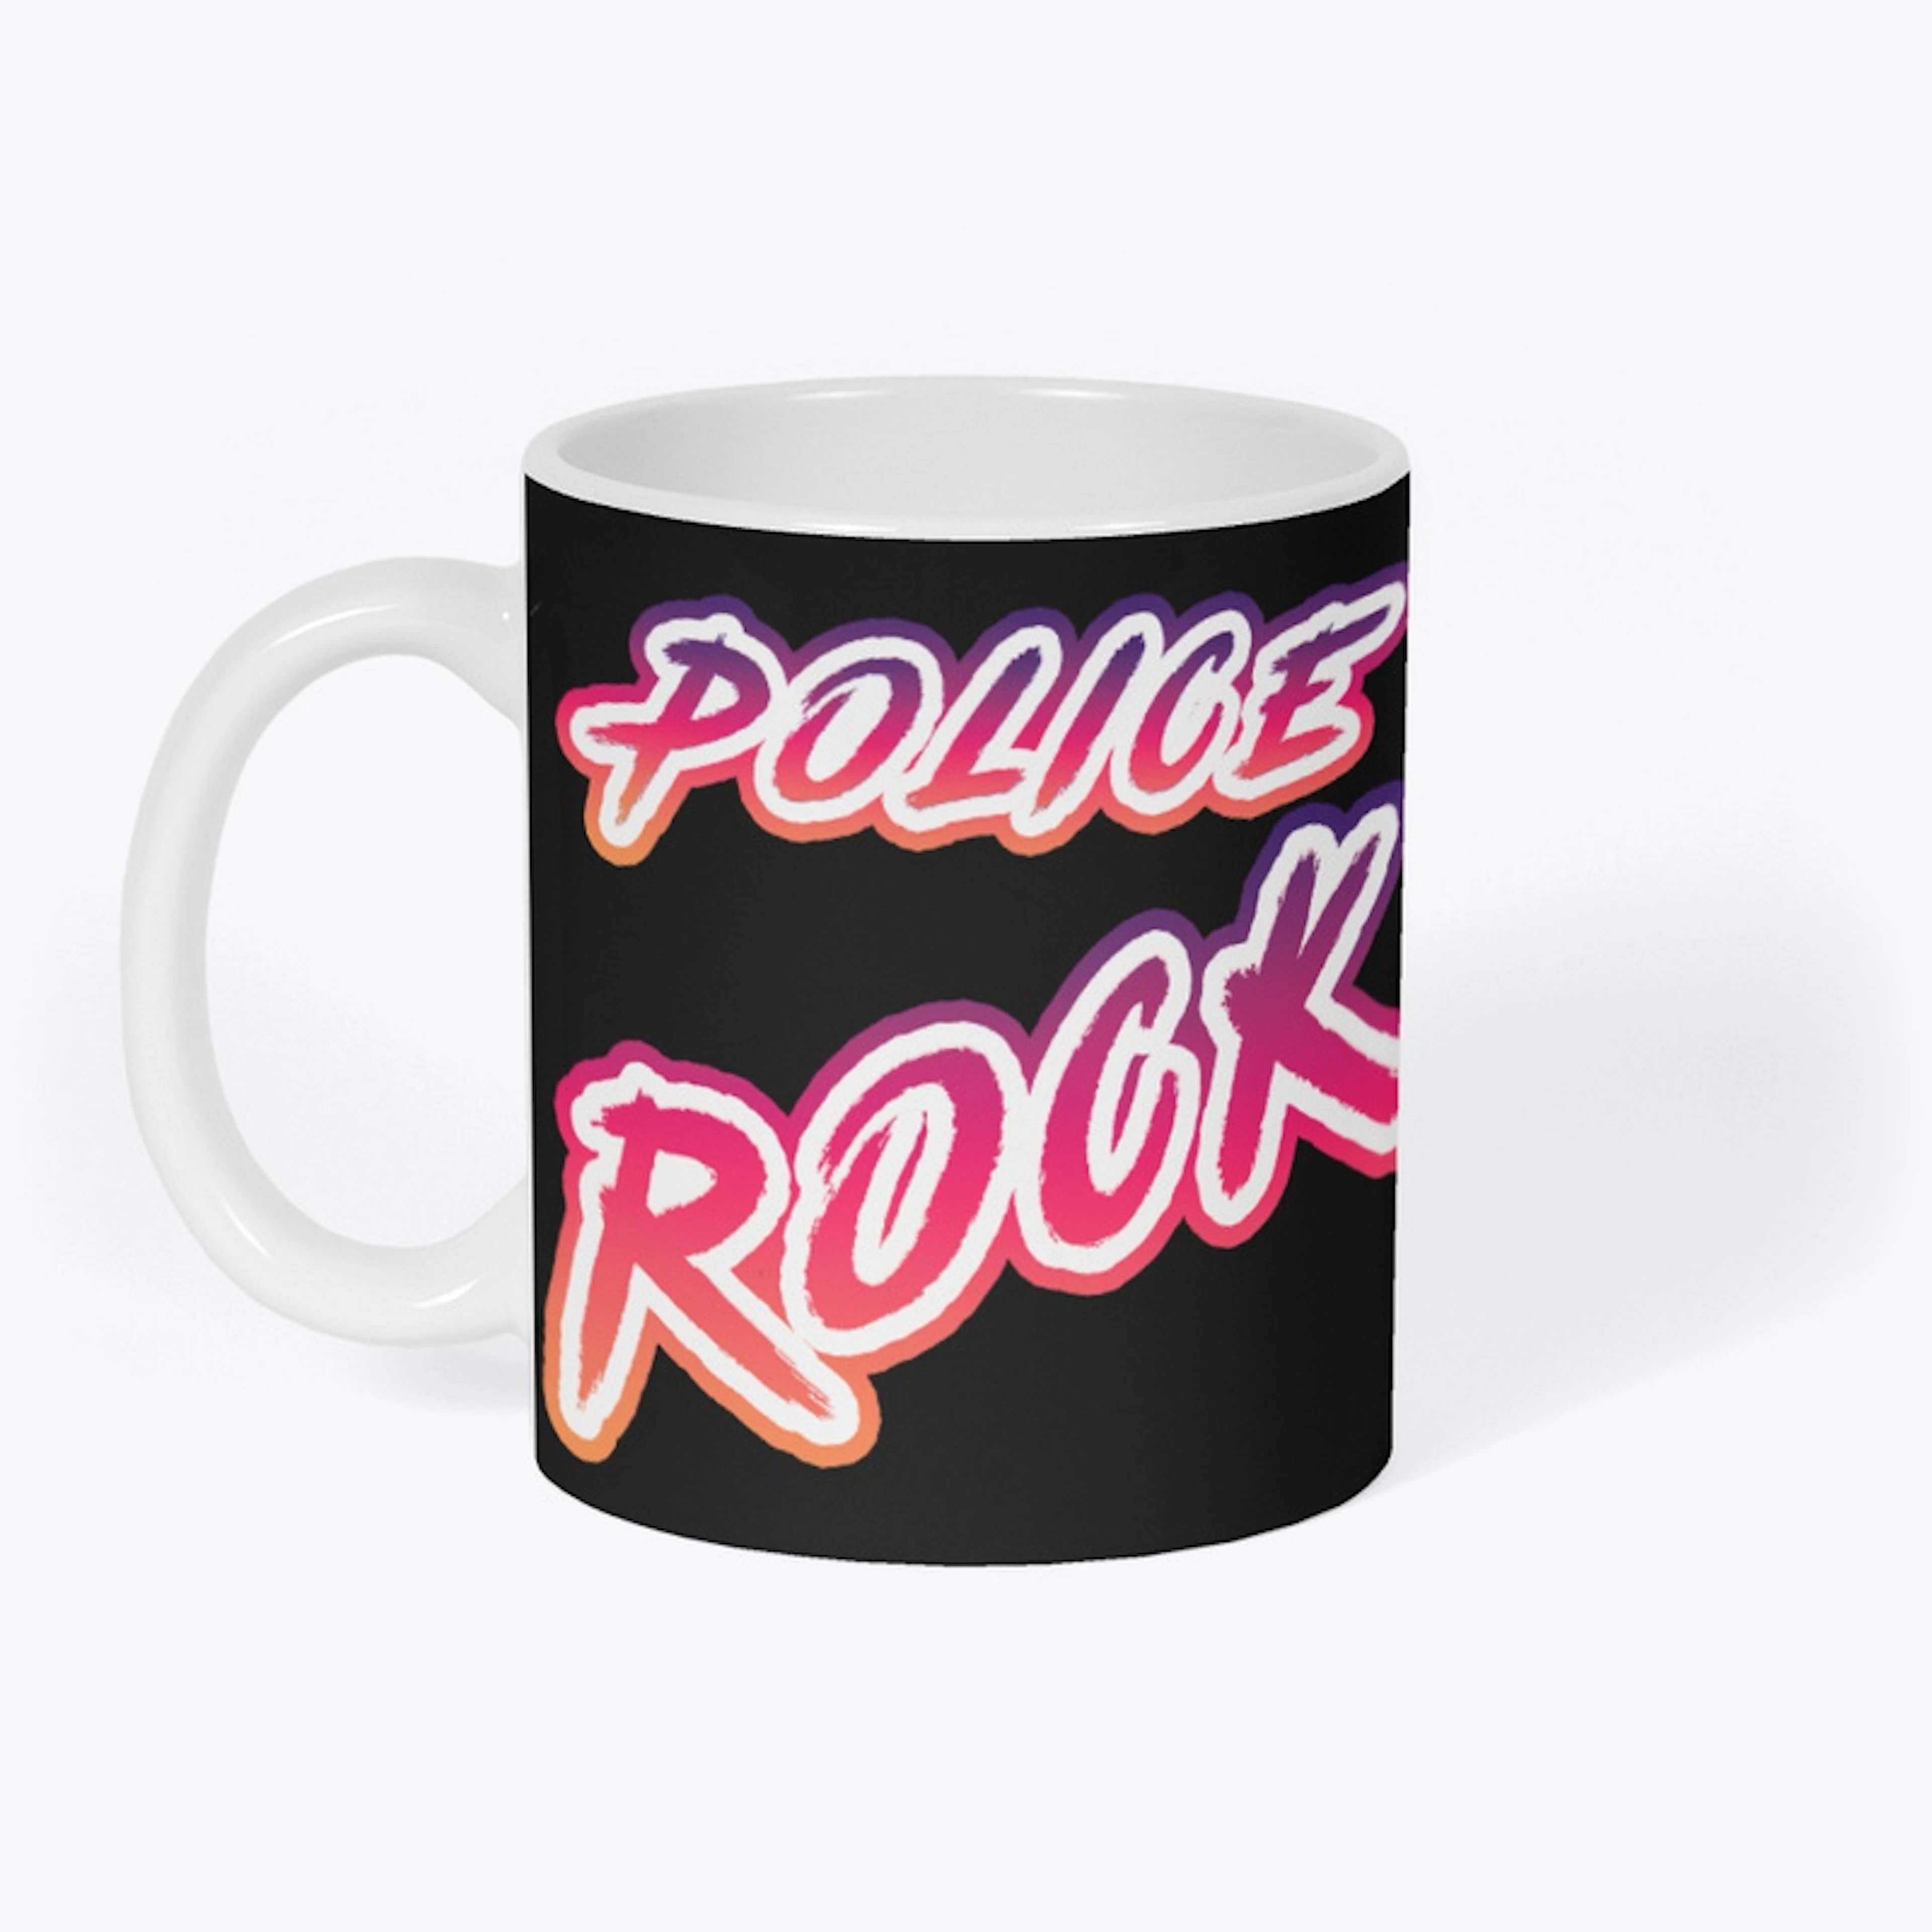 Police ROCK!